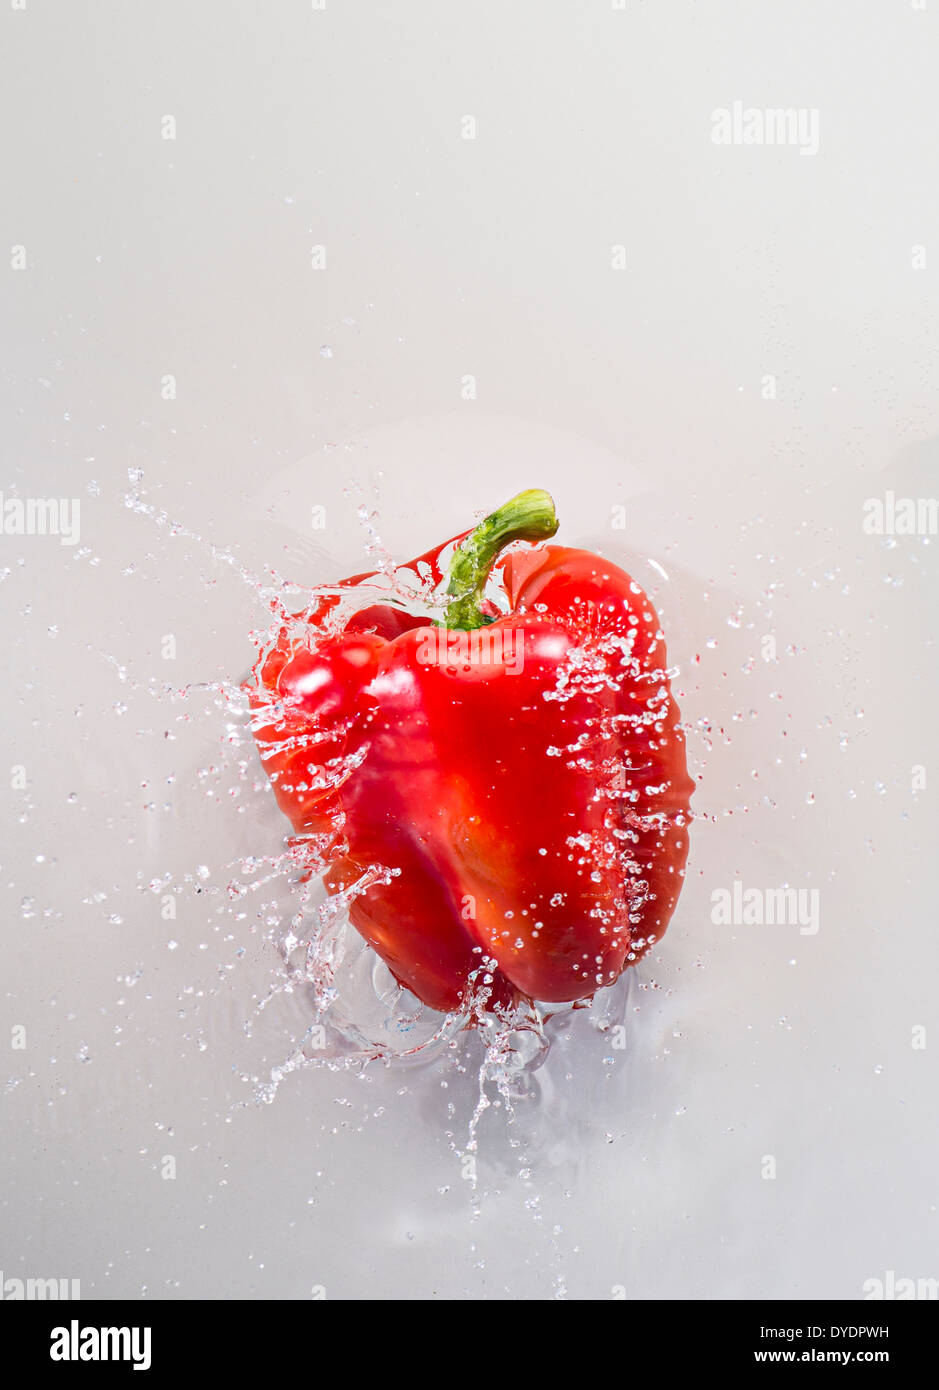 Red Bell Pepper Splashing In Water, White Background Stock Photo